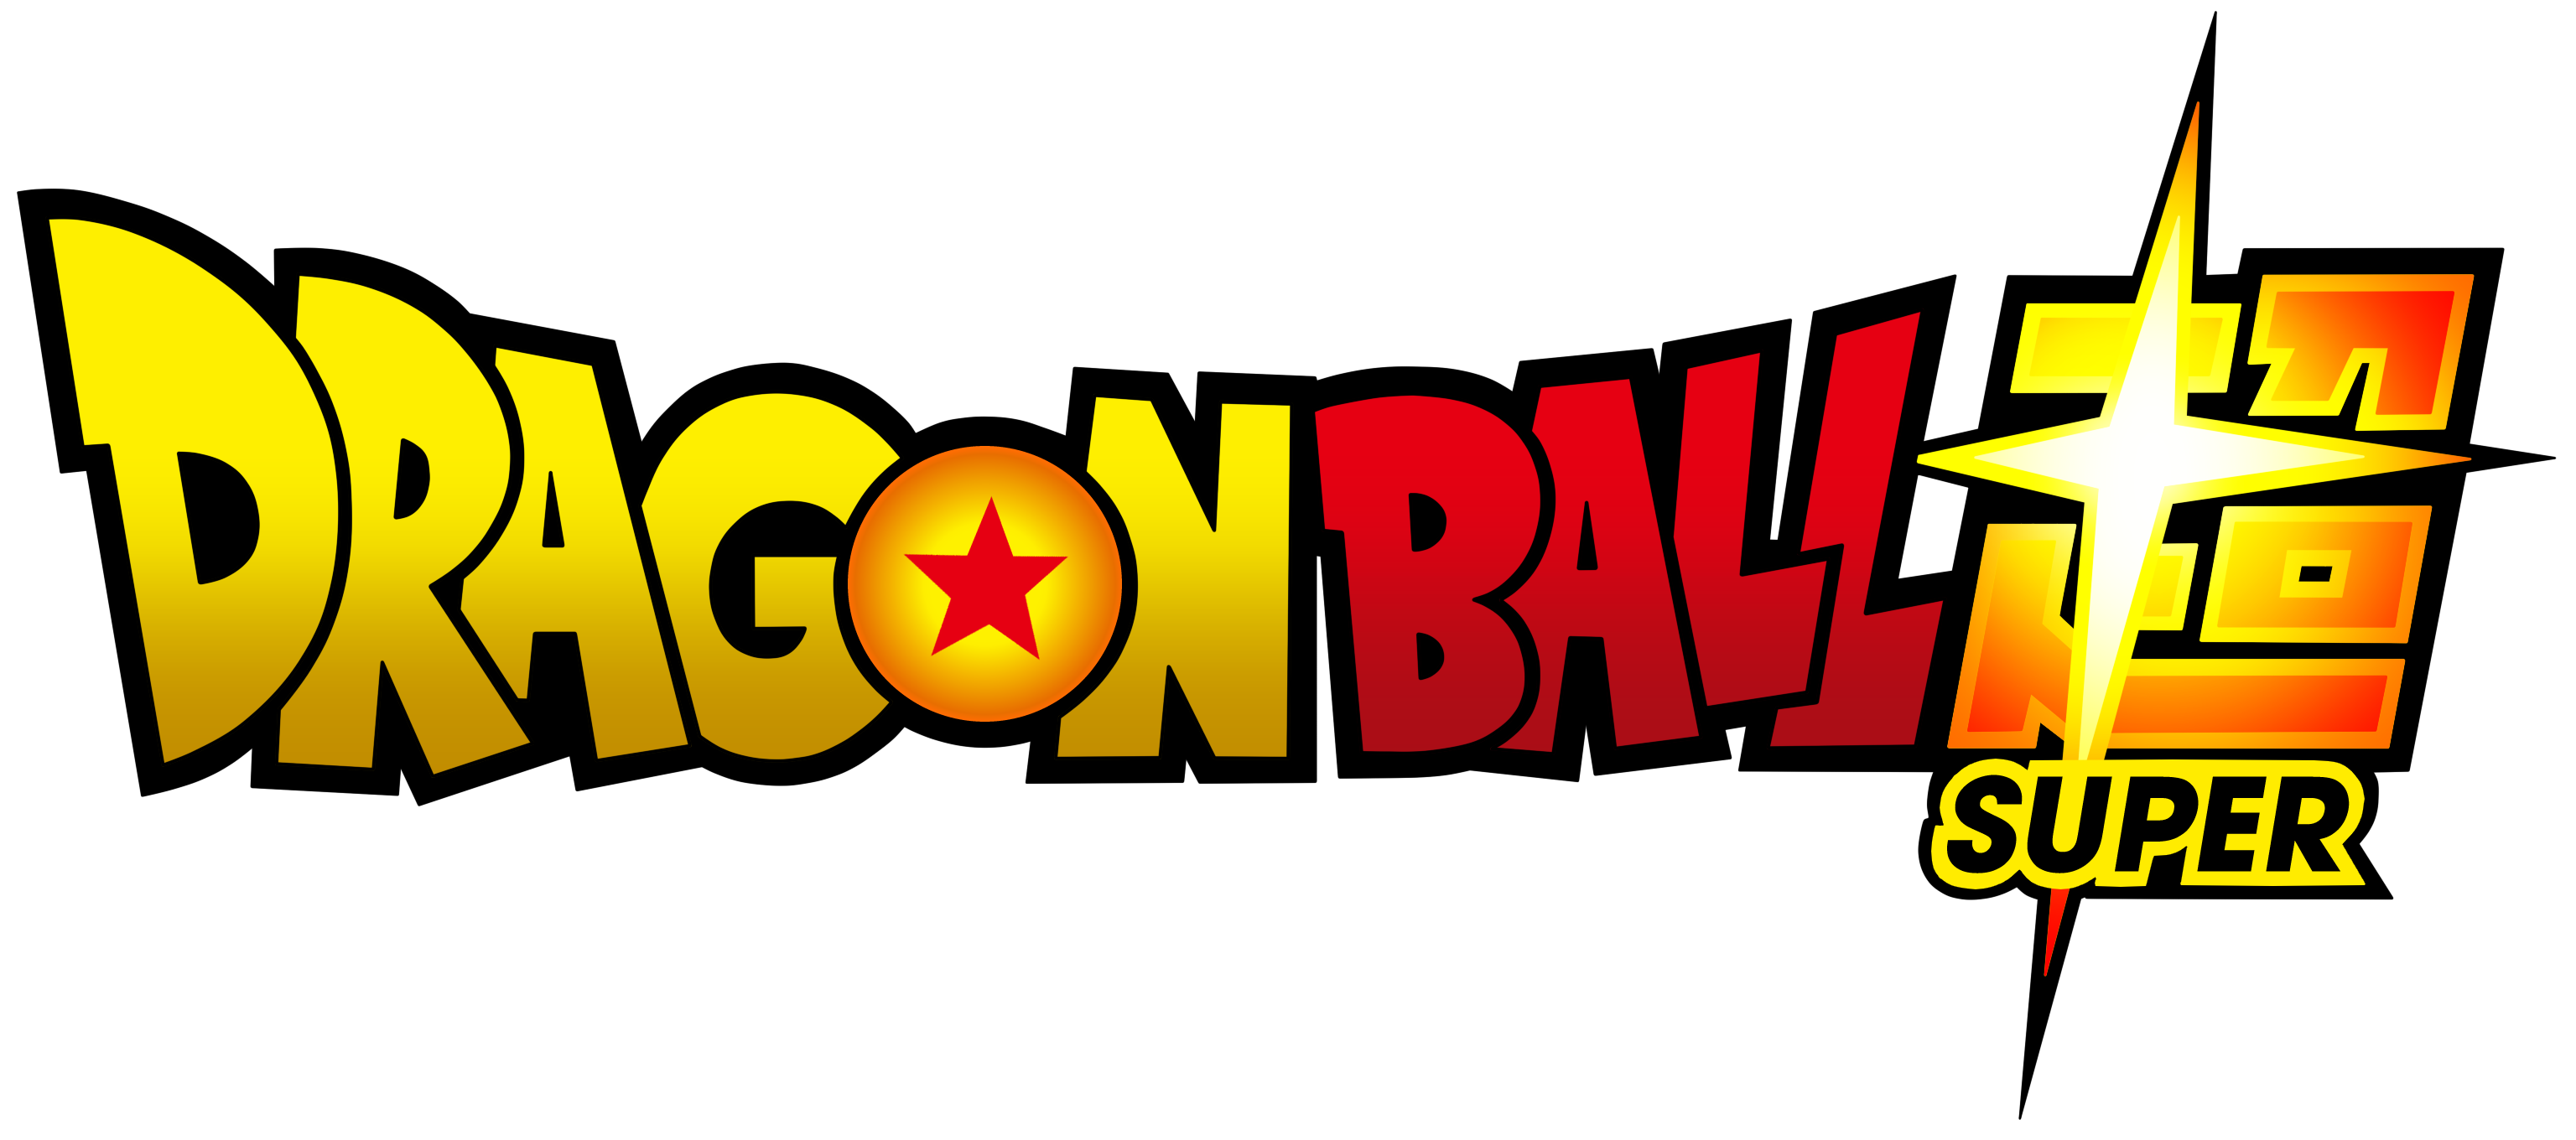 Dragon Ball Super logo.